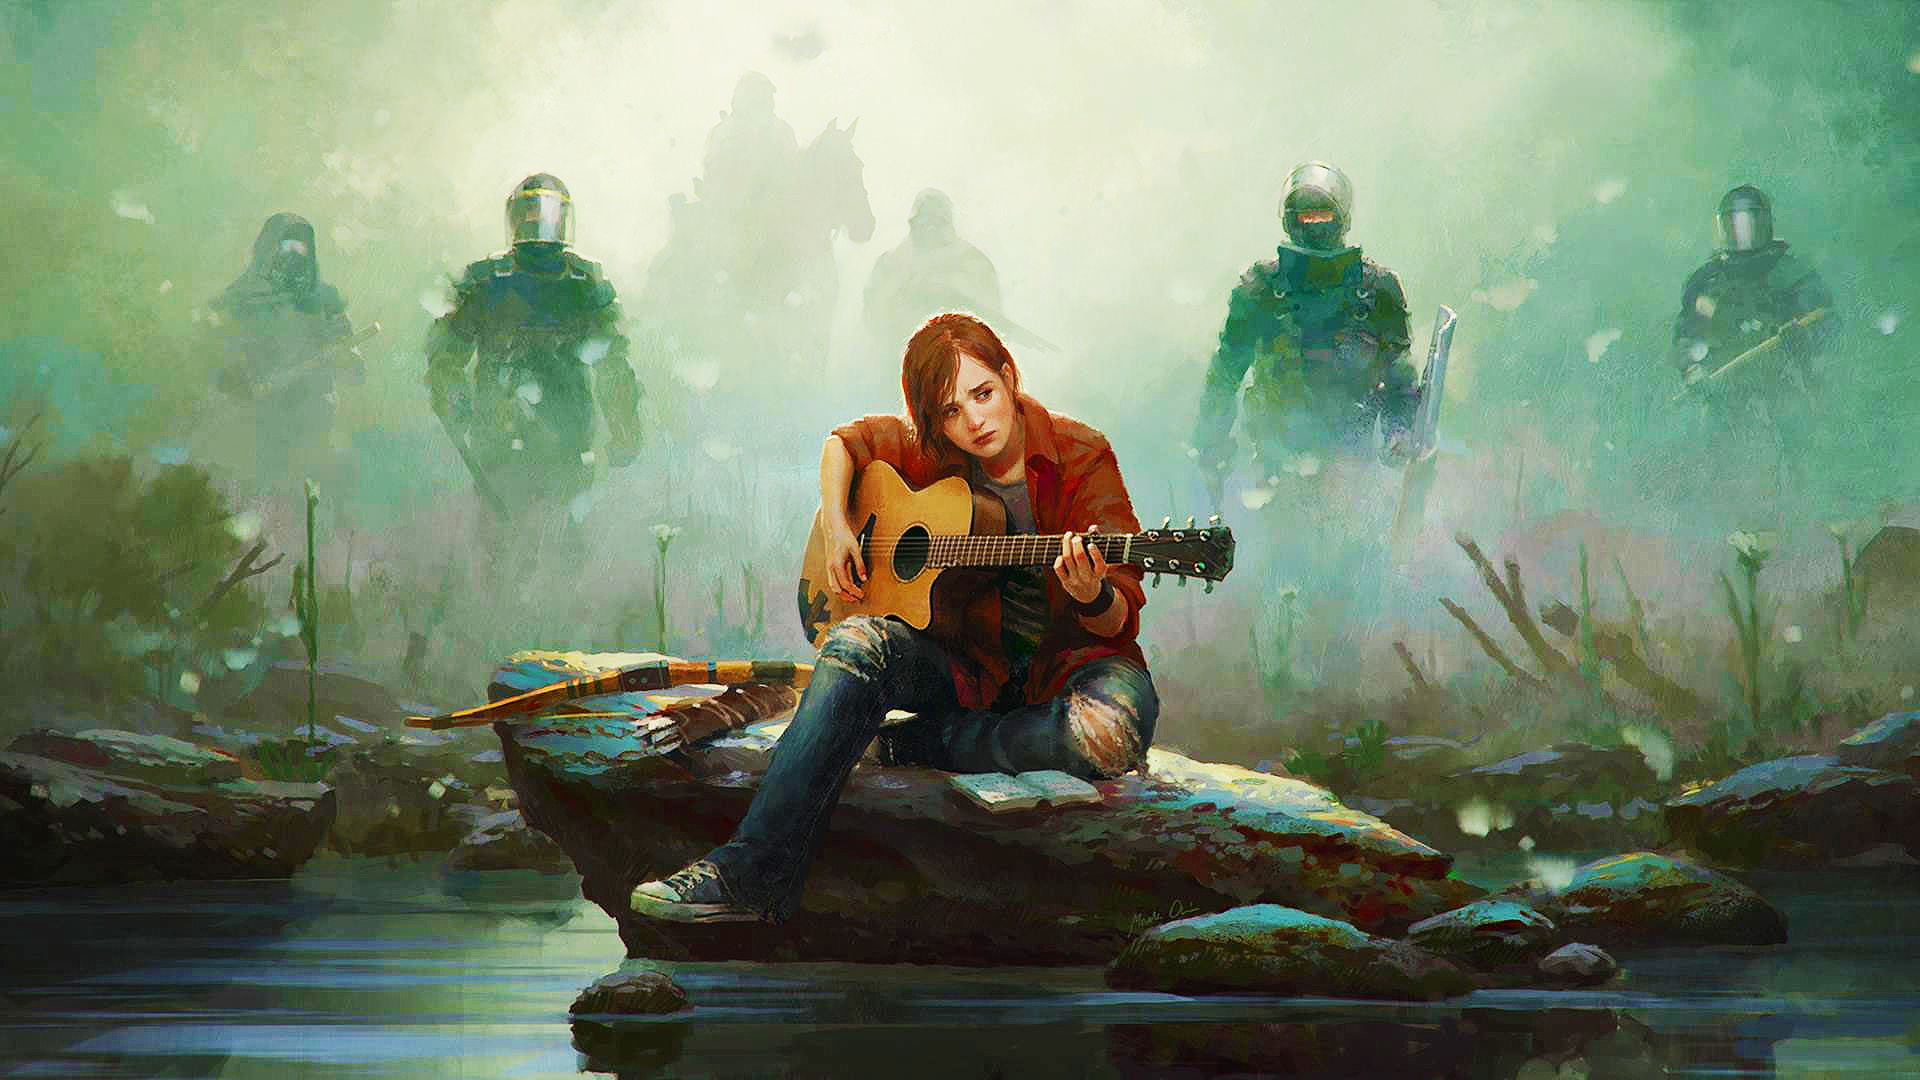 The Last of Us Part II احتمالا در فوریه 2020 عرضه خواهد شد